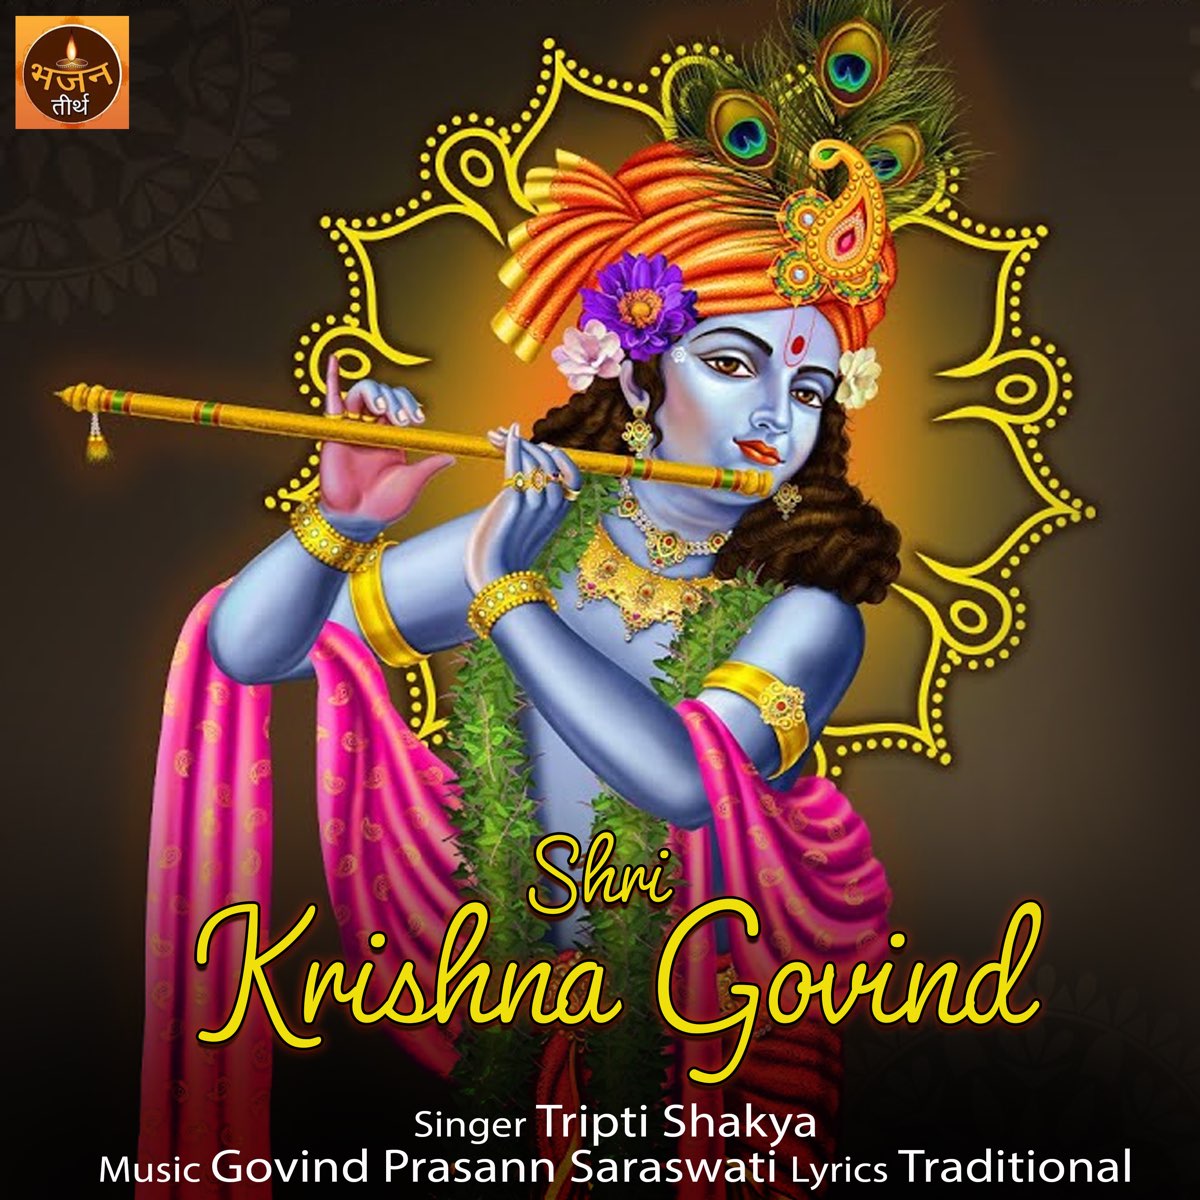 Shri Krishna Govind - EP by Tripti Shakya on Apple Music